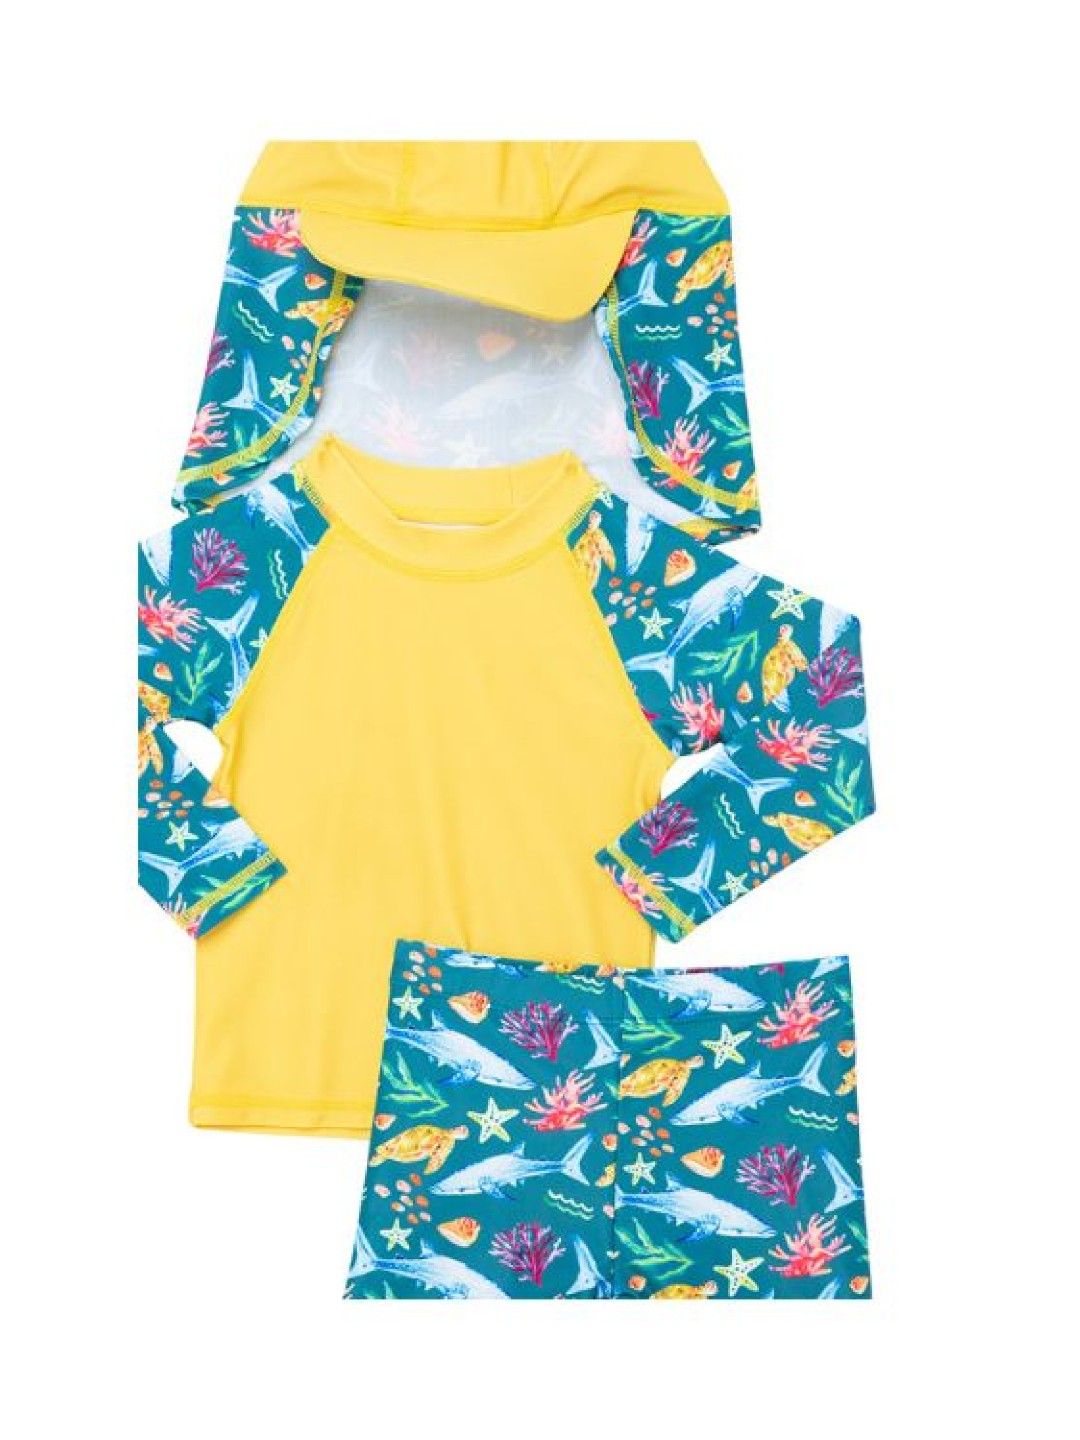 bean fashion Anina Rubio Siargao 3-Piece Long Sleeves Rashguard with Shorts and Cap (Yellow- Image 4)